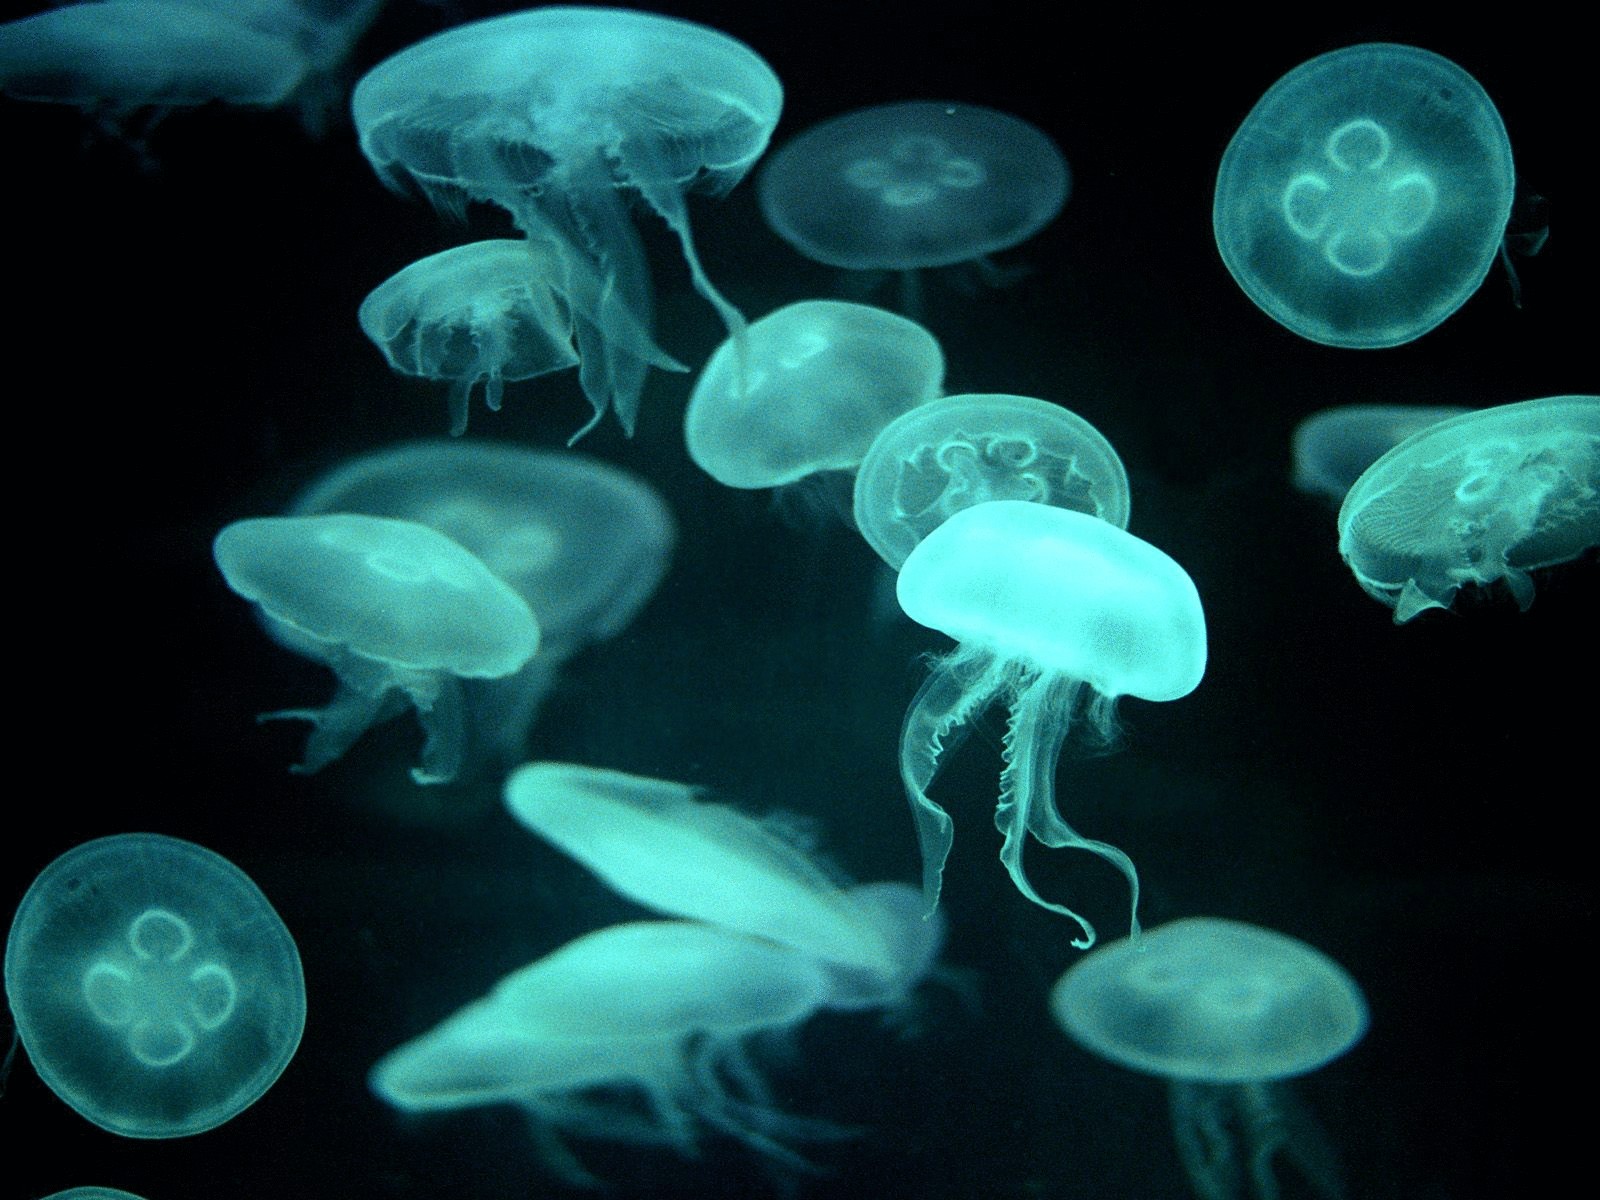 Размножение медуз грозит экологическими неприятностями